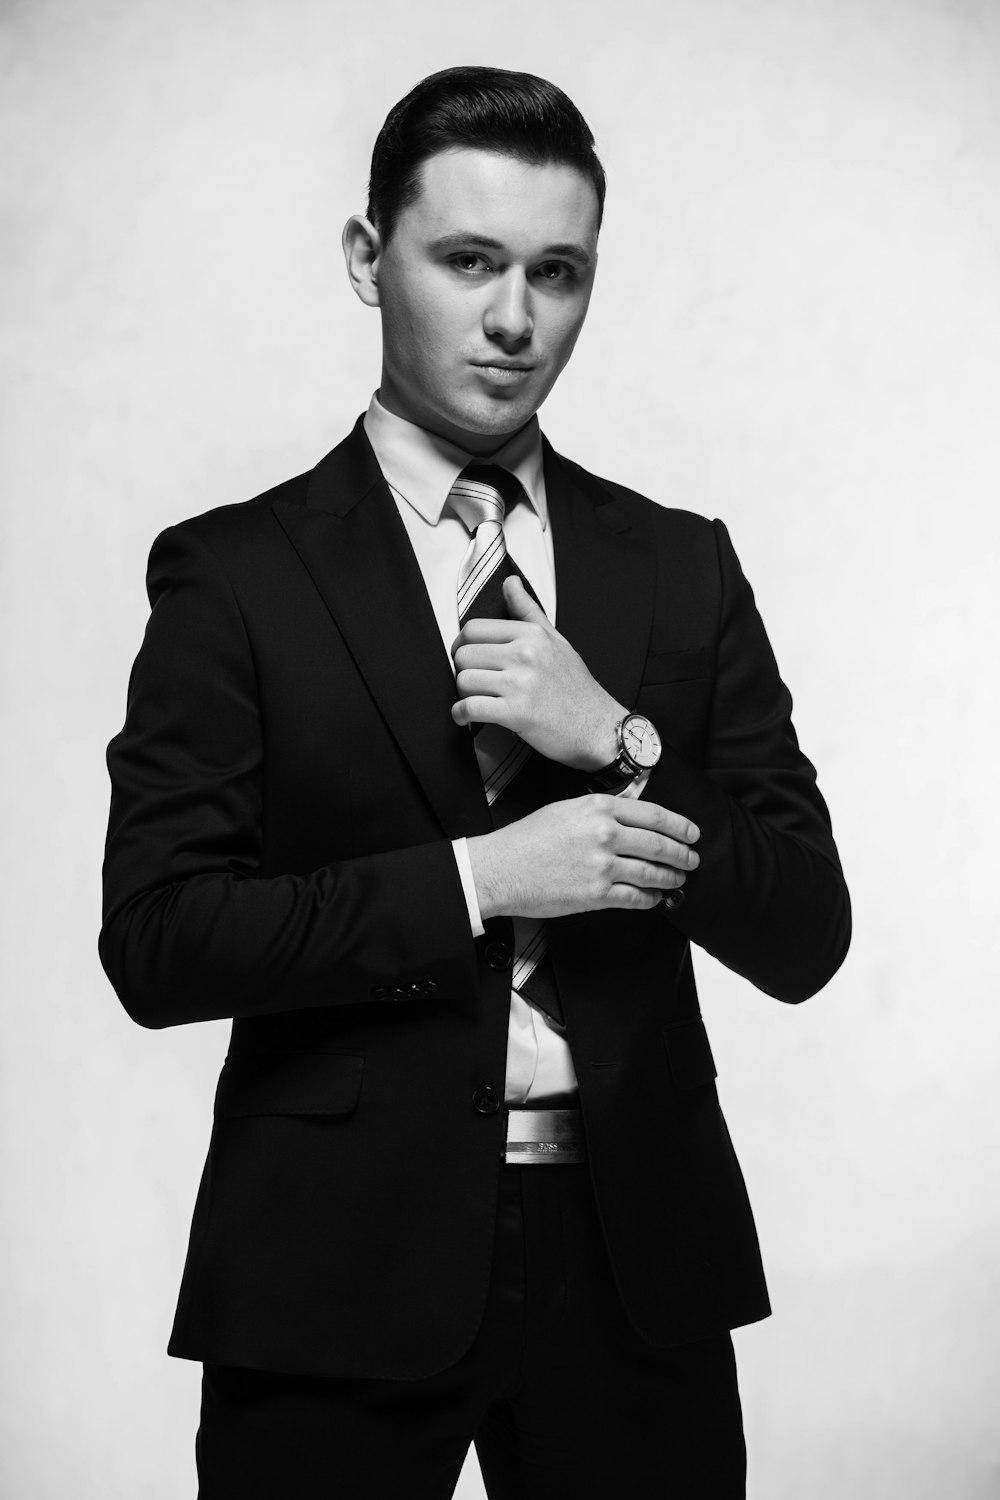 a man in a suit adjusting his tie